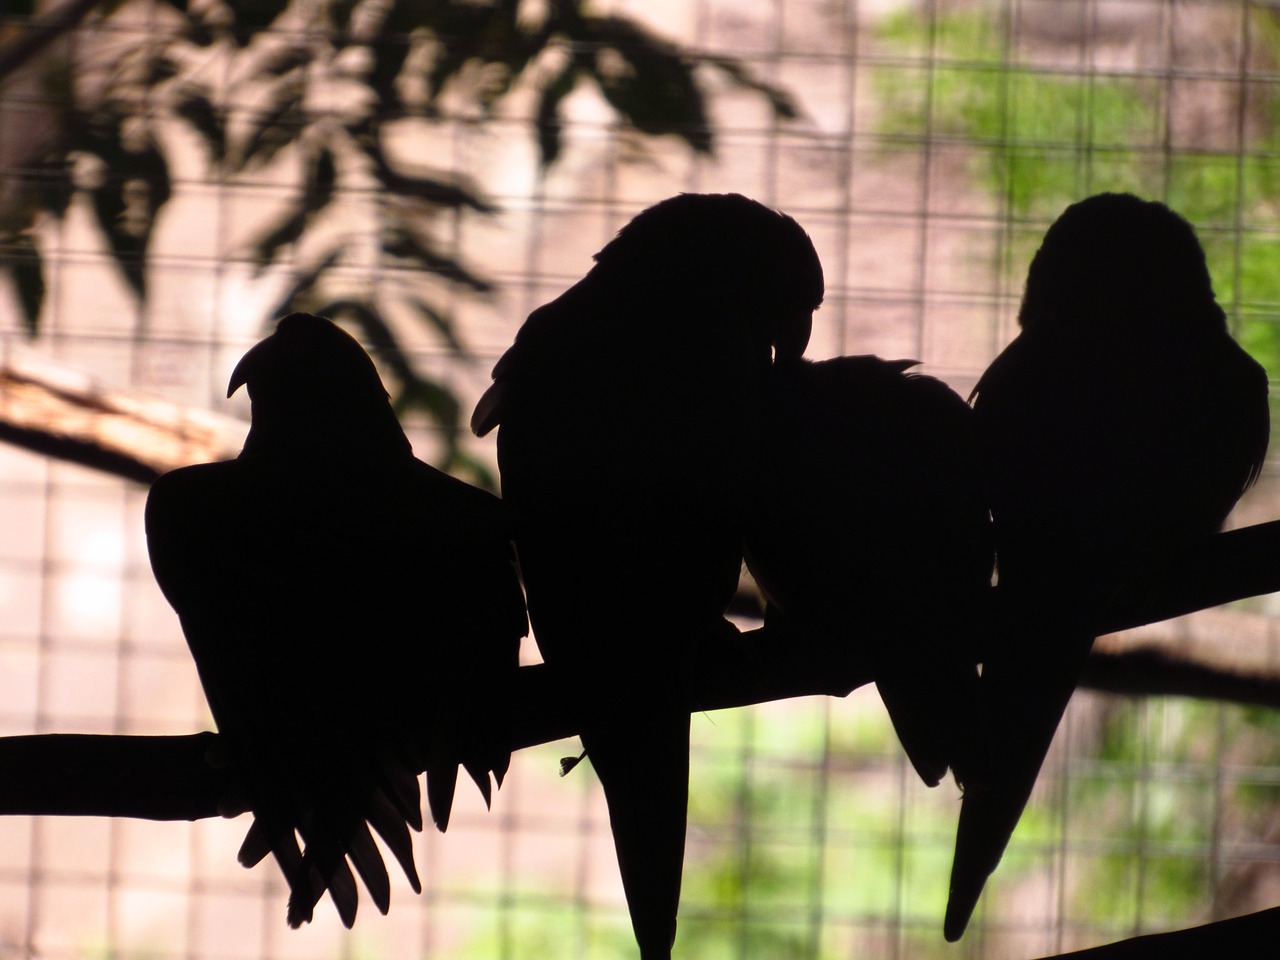 parrots silhouette nature free photo